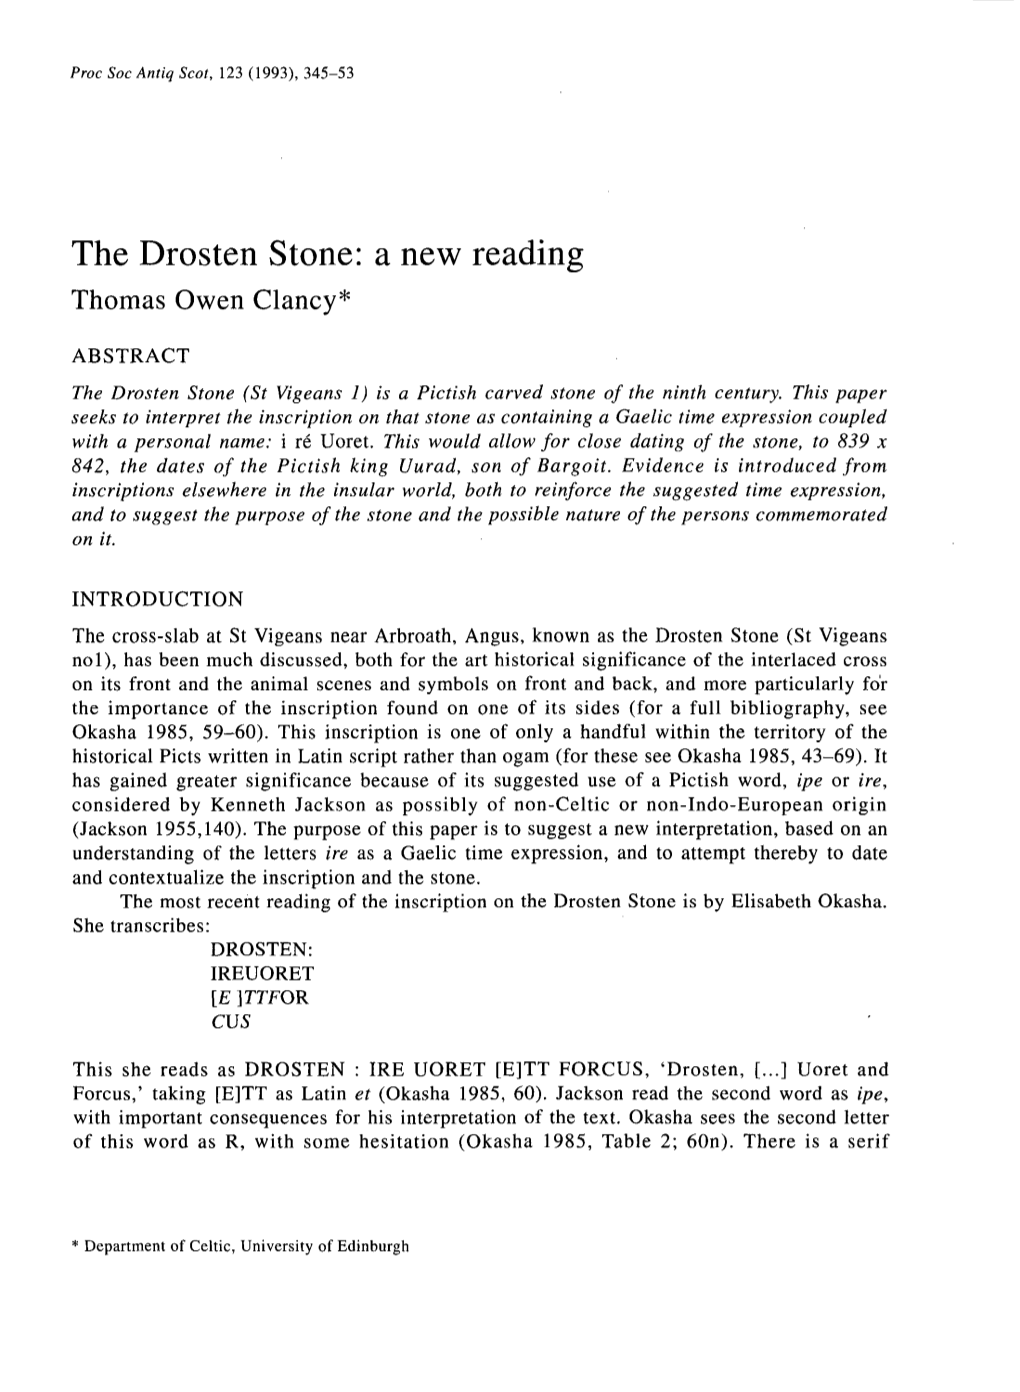 The Drosten Stone: a New Reading Thomas Owen Clancy*